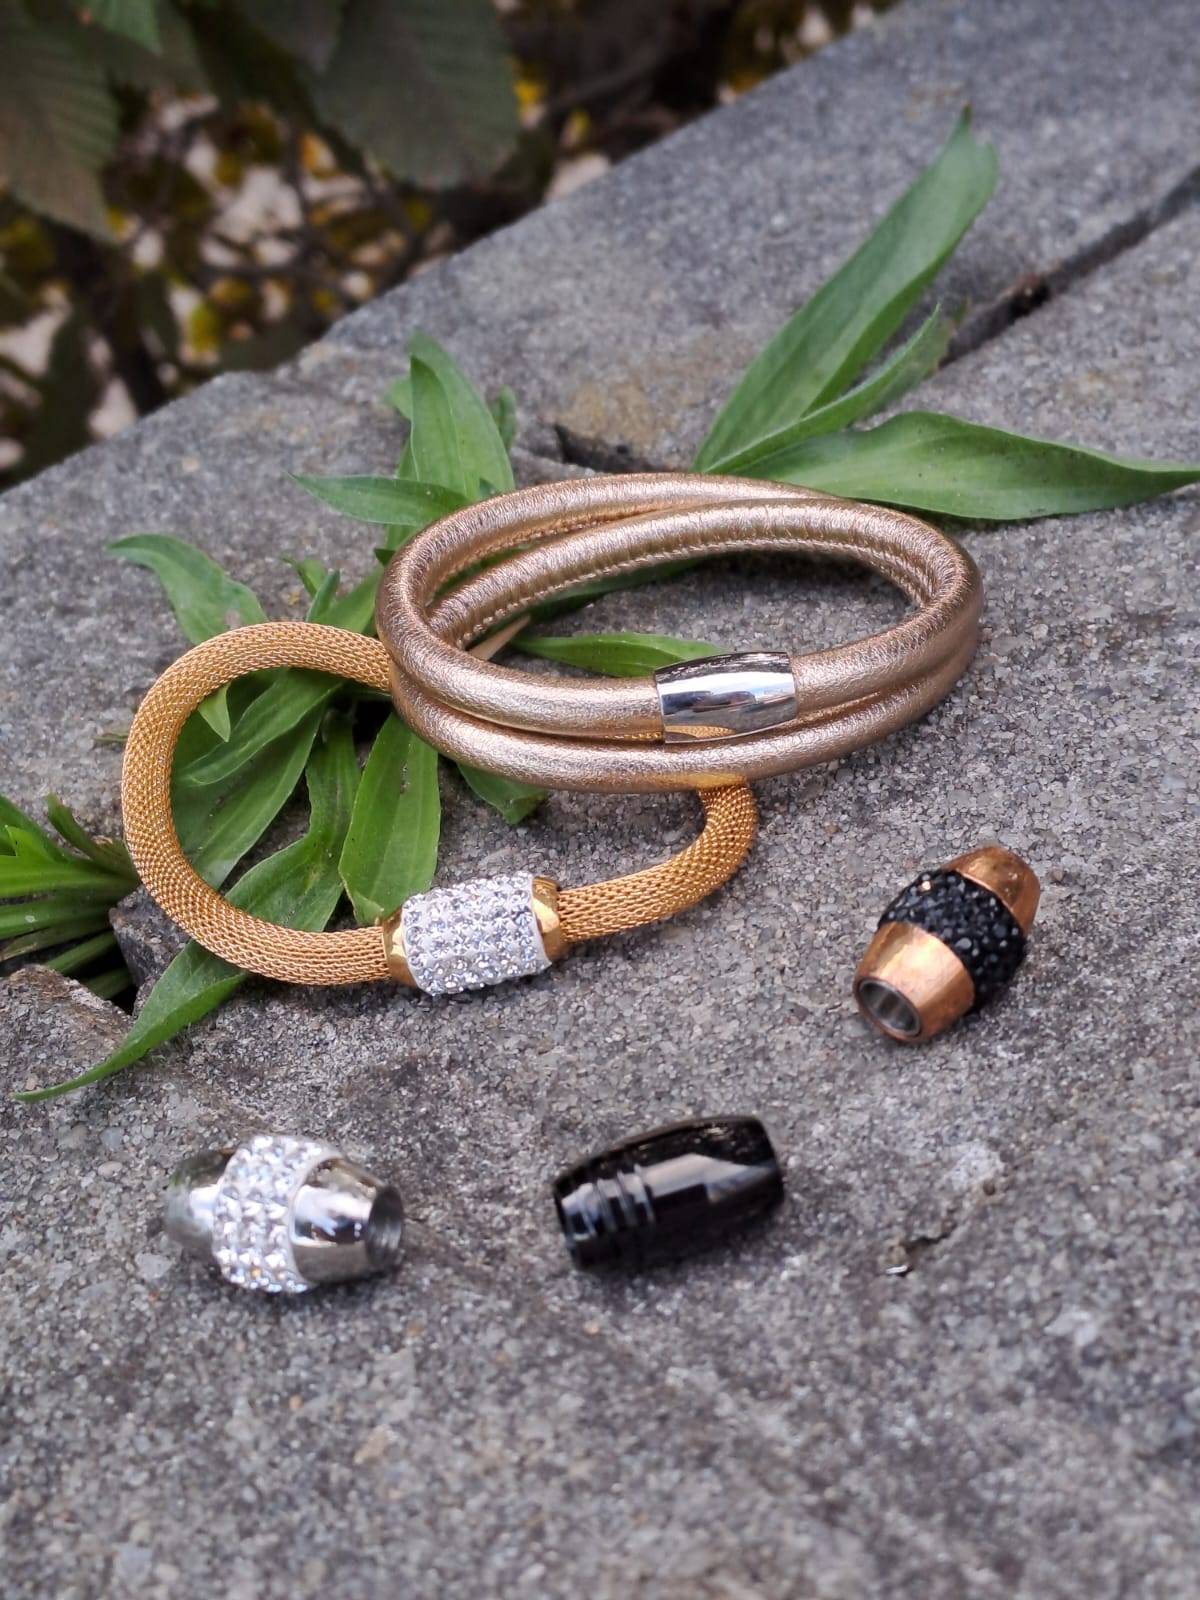 Men's Snake Head Bracelet - Natural Python with Zircon Diamond